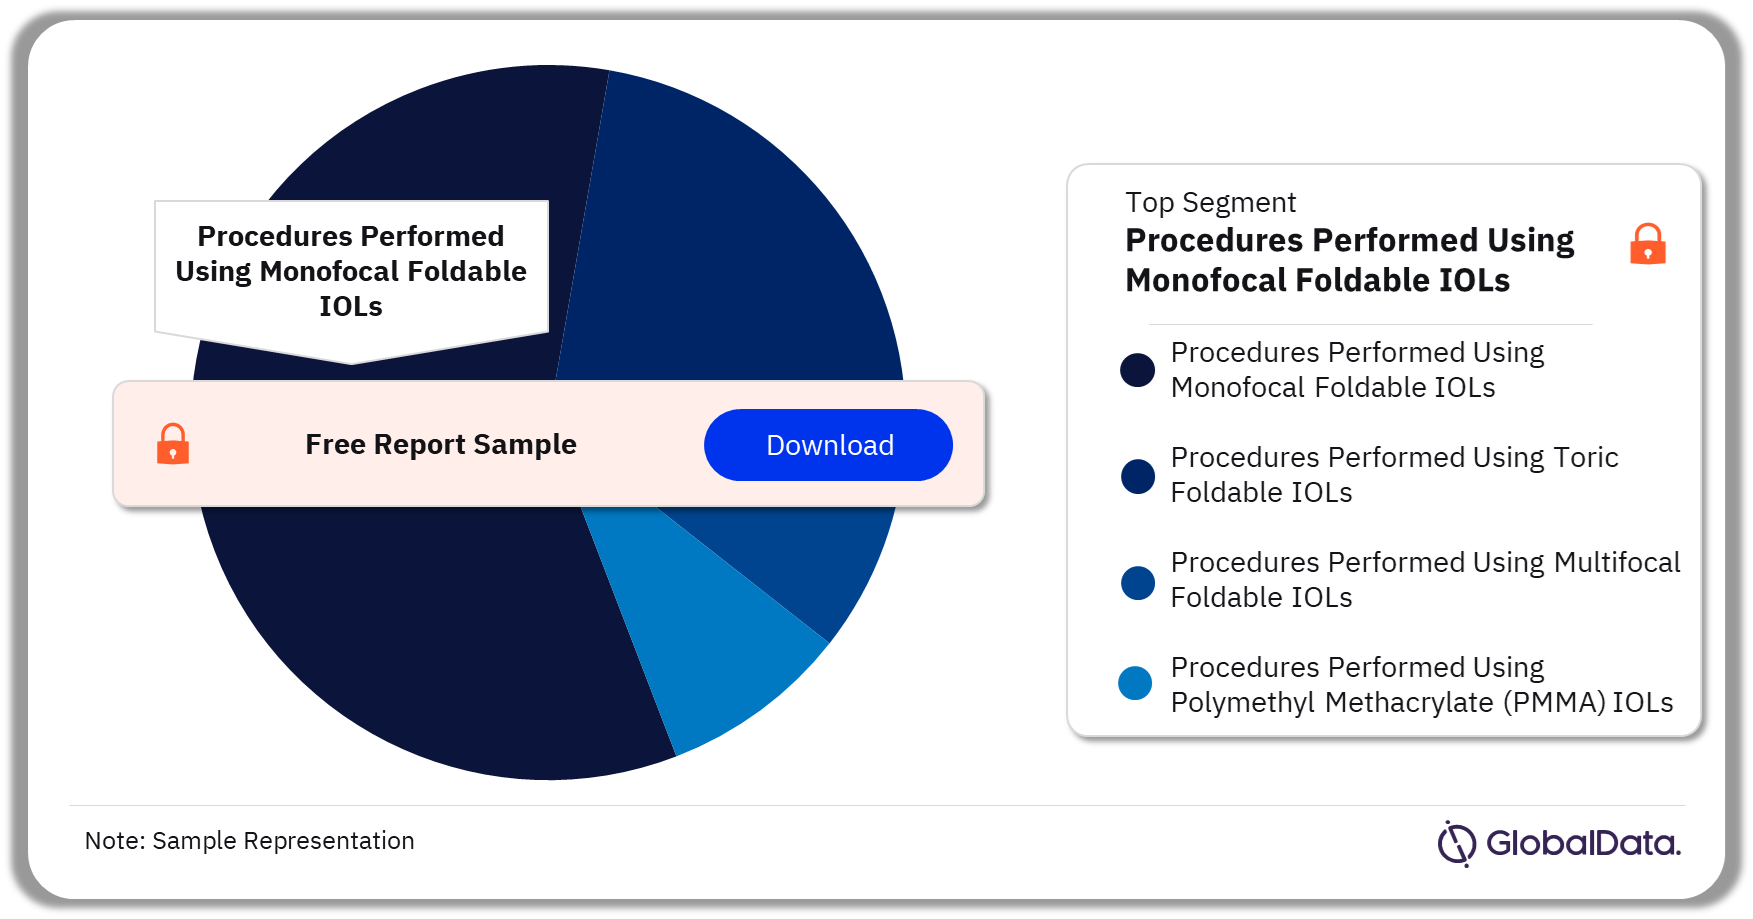 India Intraocular Lens (IOL) Procedures Market Analysis by Segments, 2022 (%)